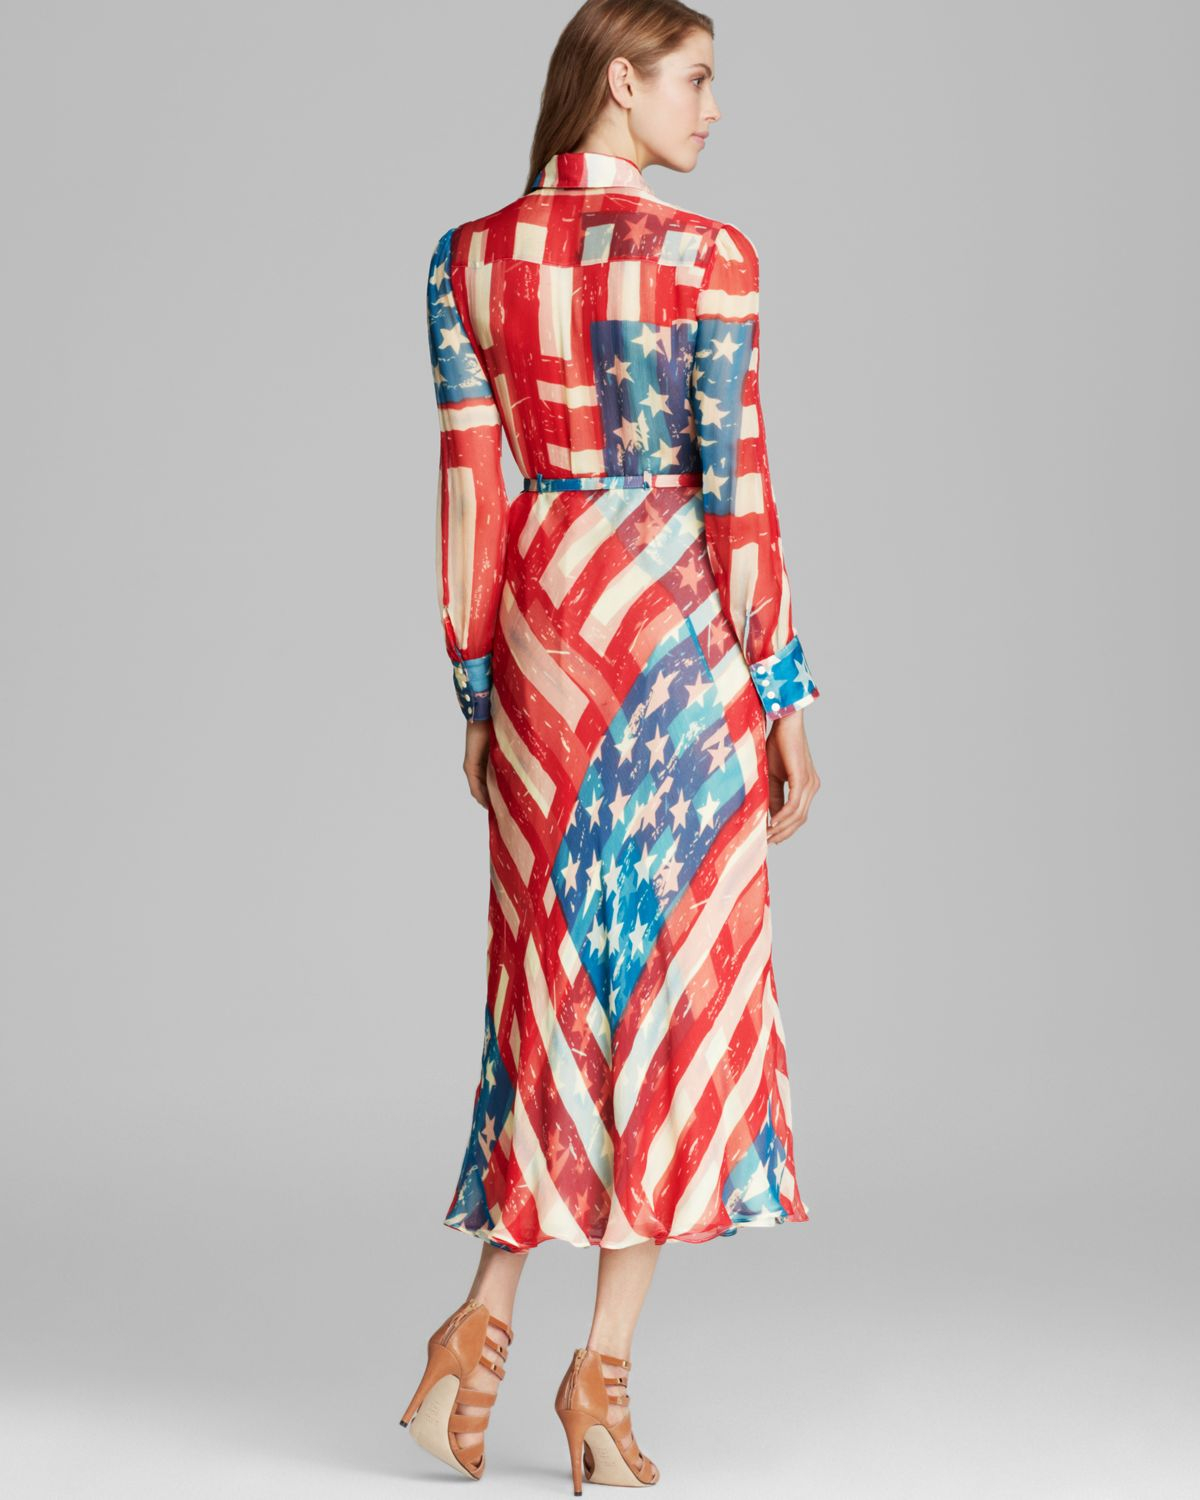 Flag print dress